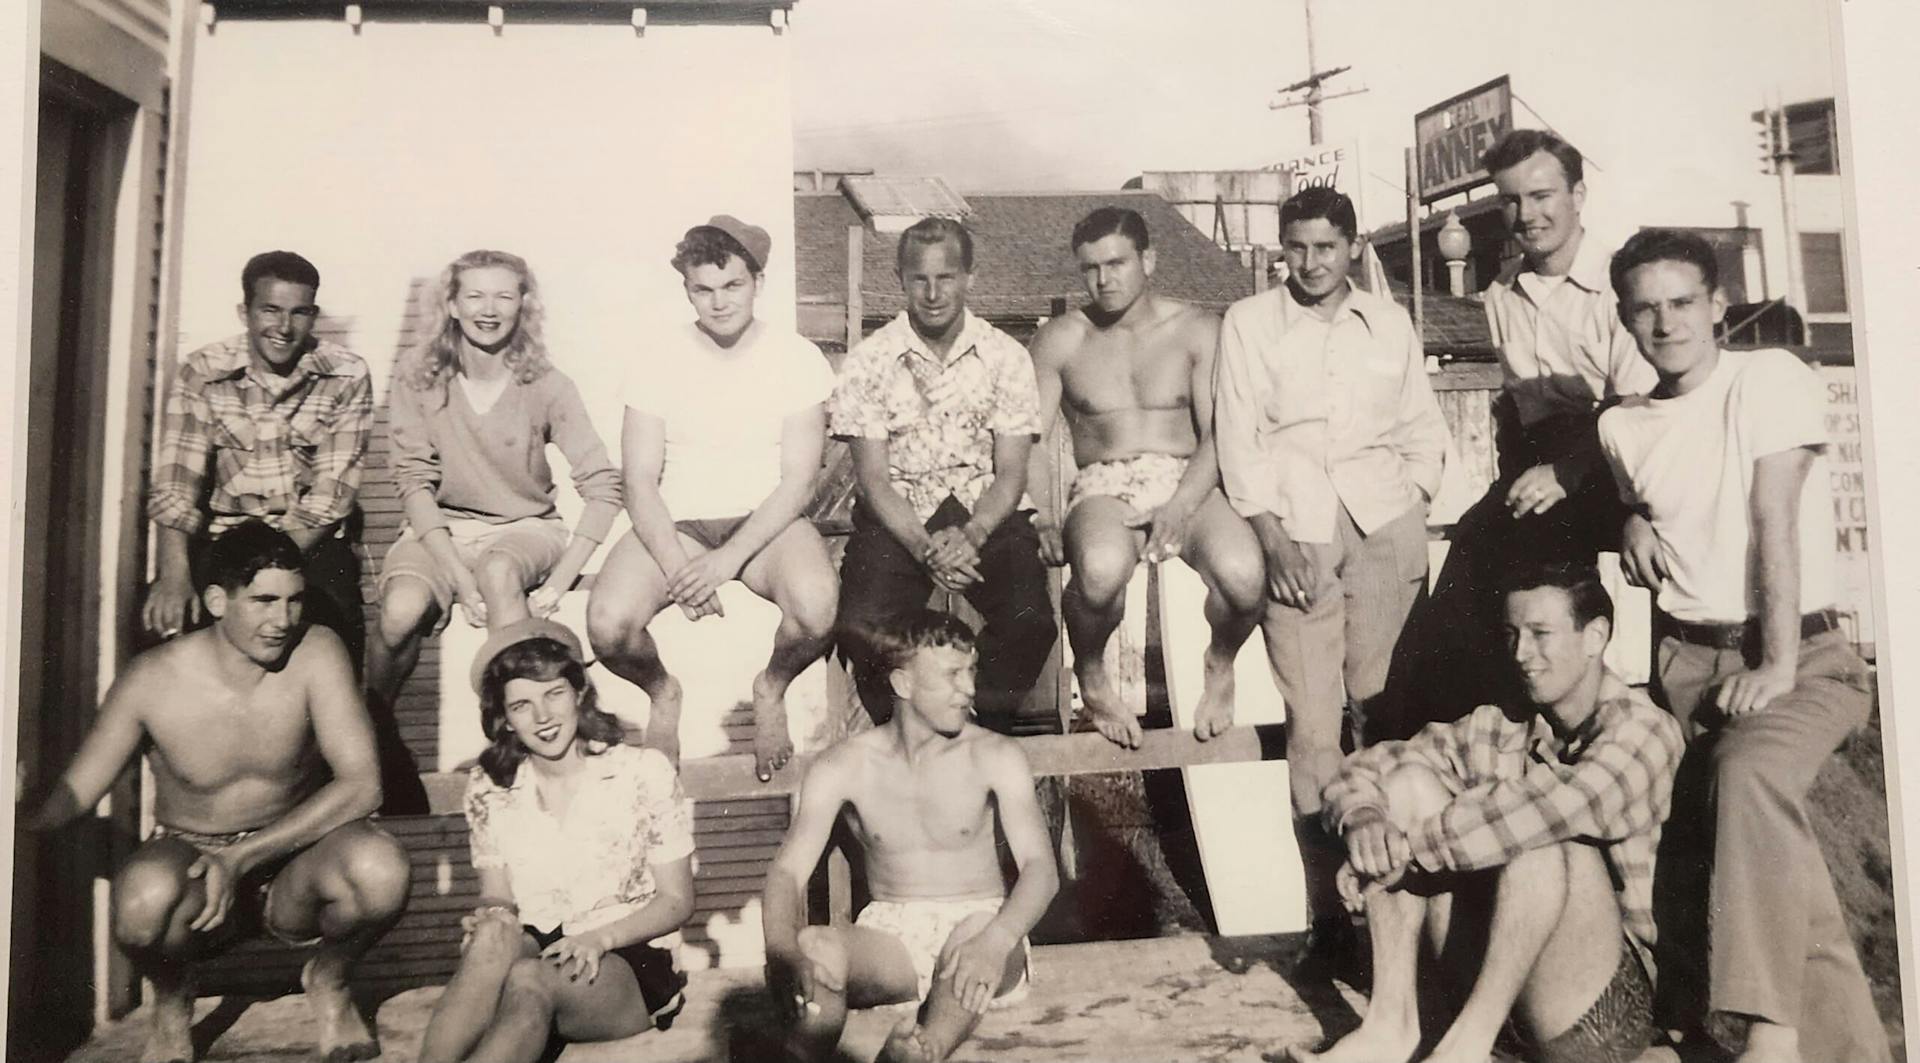 Ritt and his friends hanging out along a beach rail